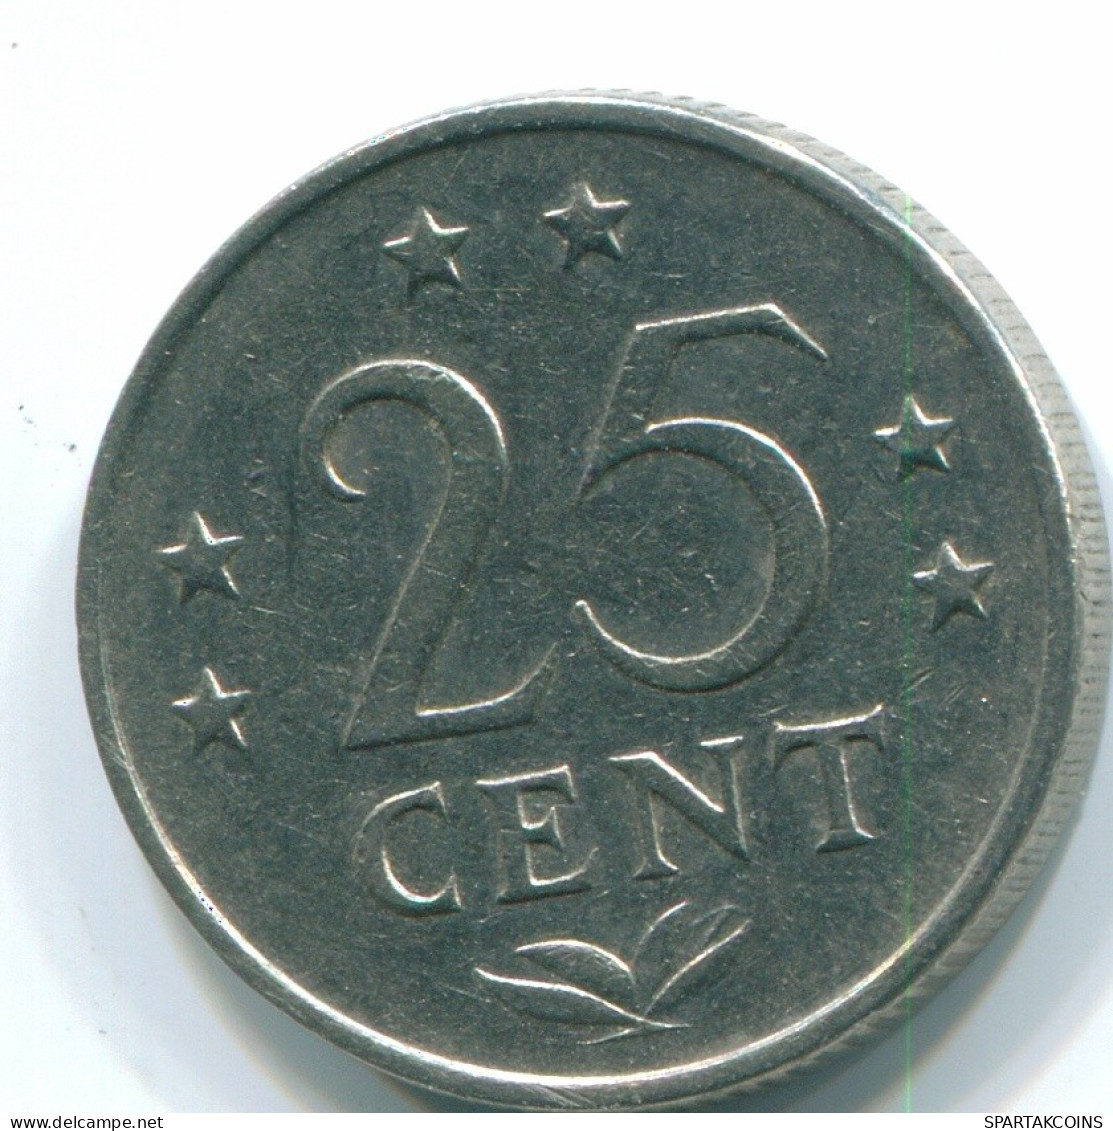 25 CENTS 1971 NIEDERLÄNDISCHE ANTILLEN Nickel Koloniale Münze #S11491.D.A - Nederlandse Antillen